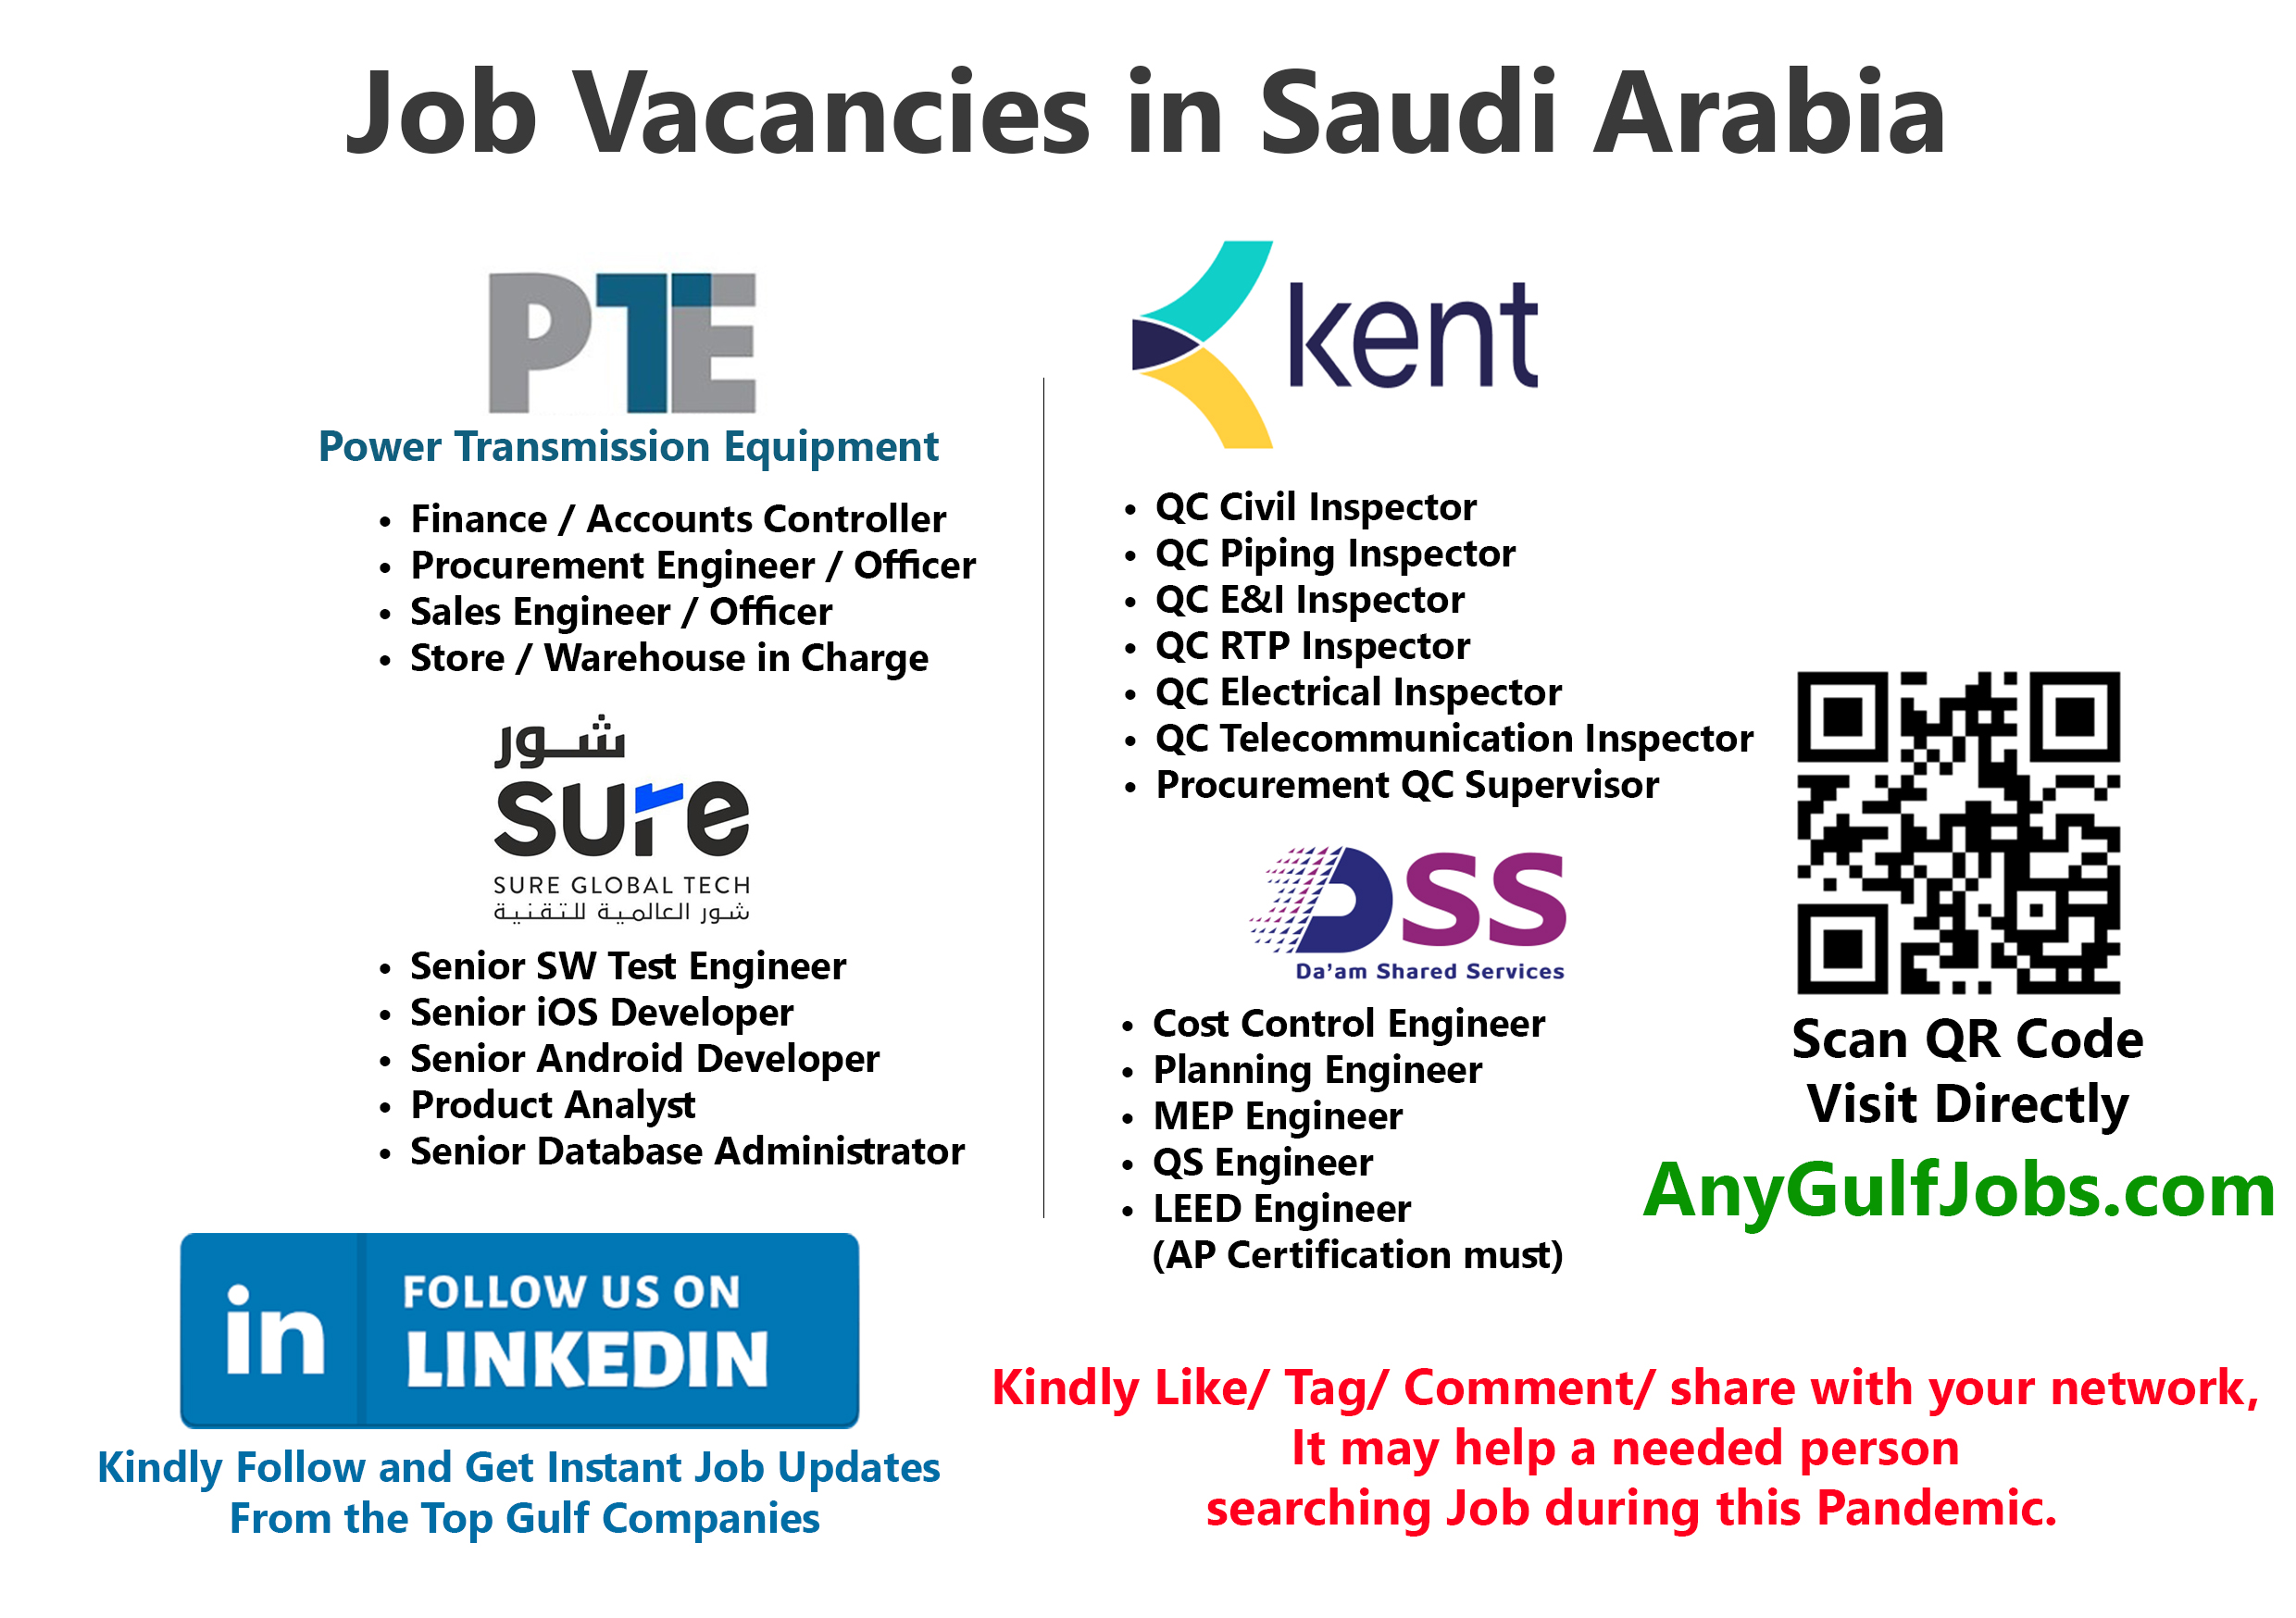 Kent Job Vacancies in Saudi Arabia